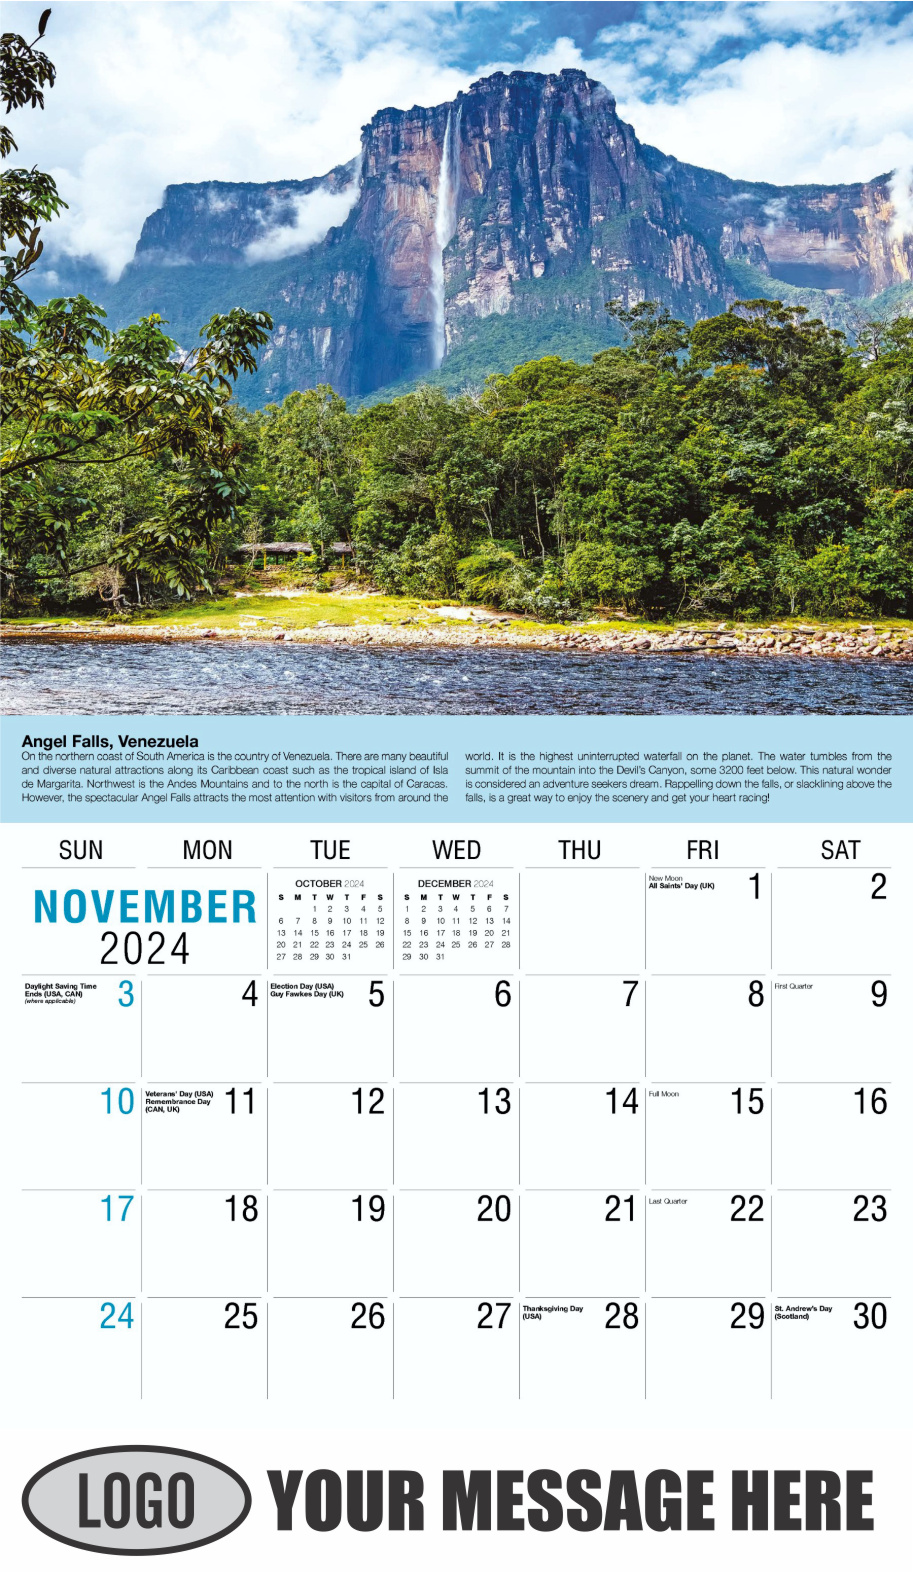 World Travel 2024 Business Advertising Wall Calendar - November